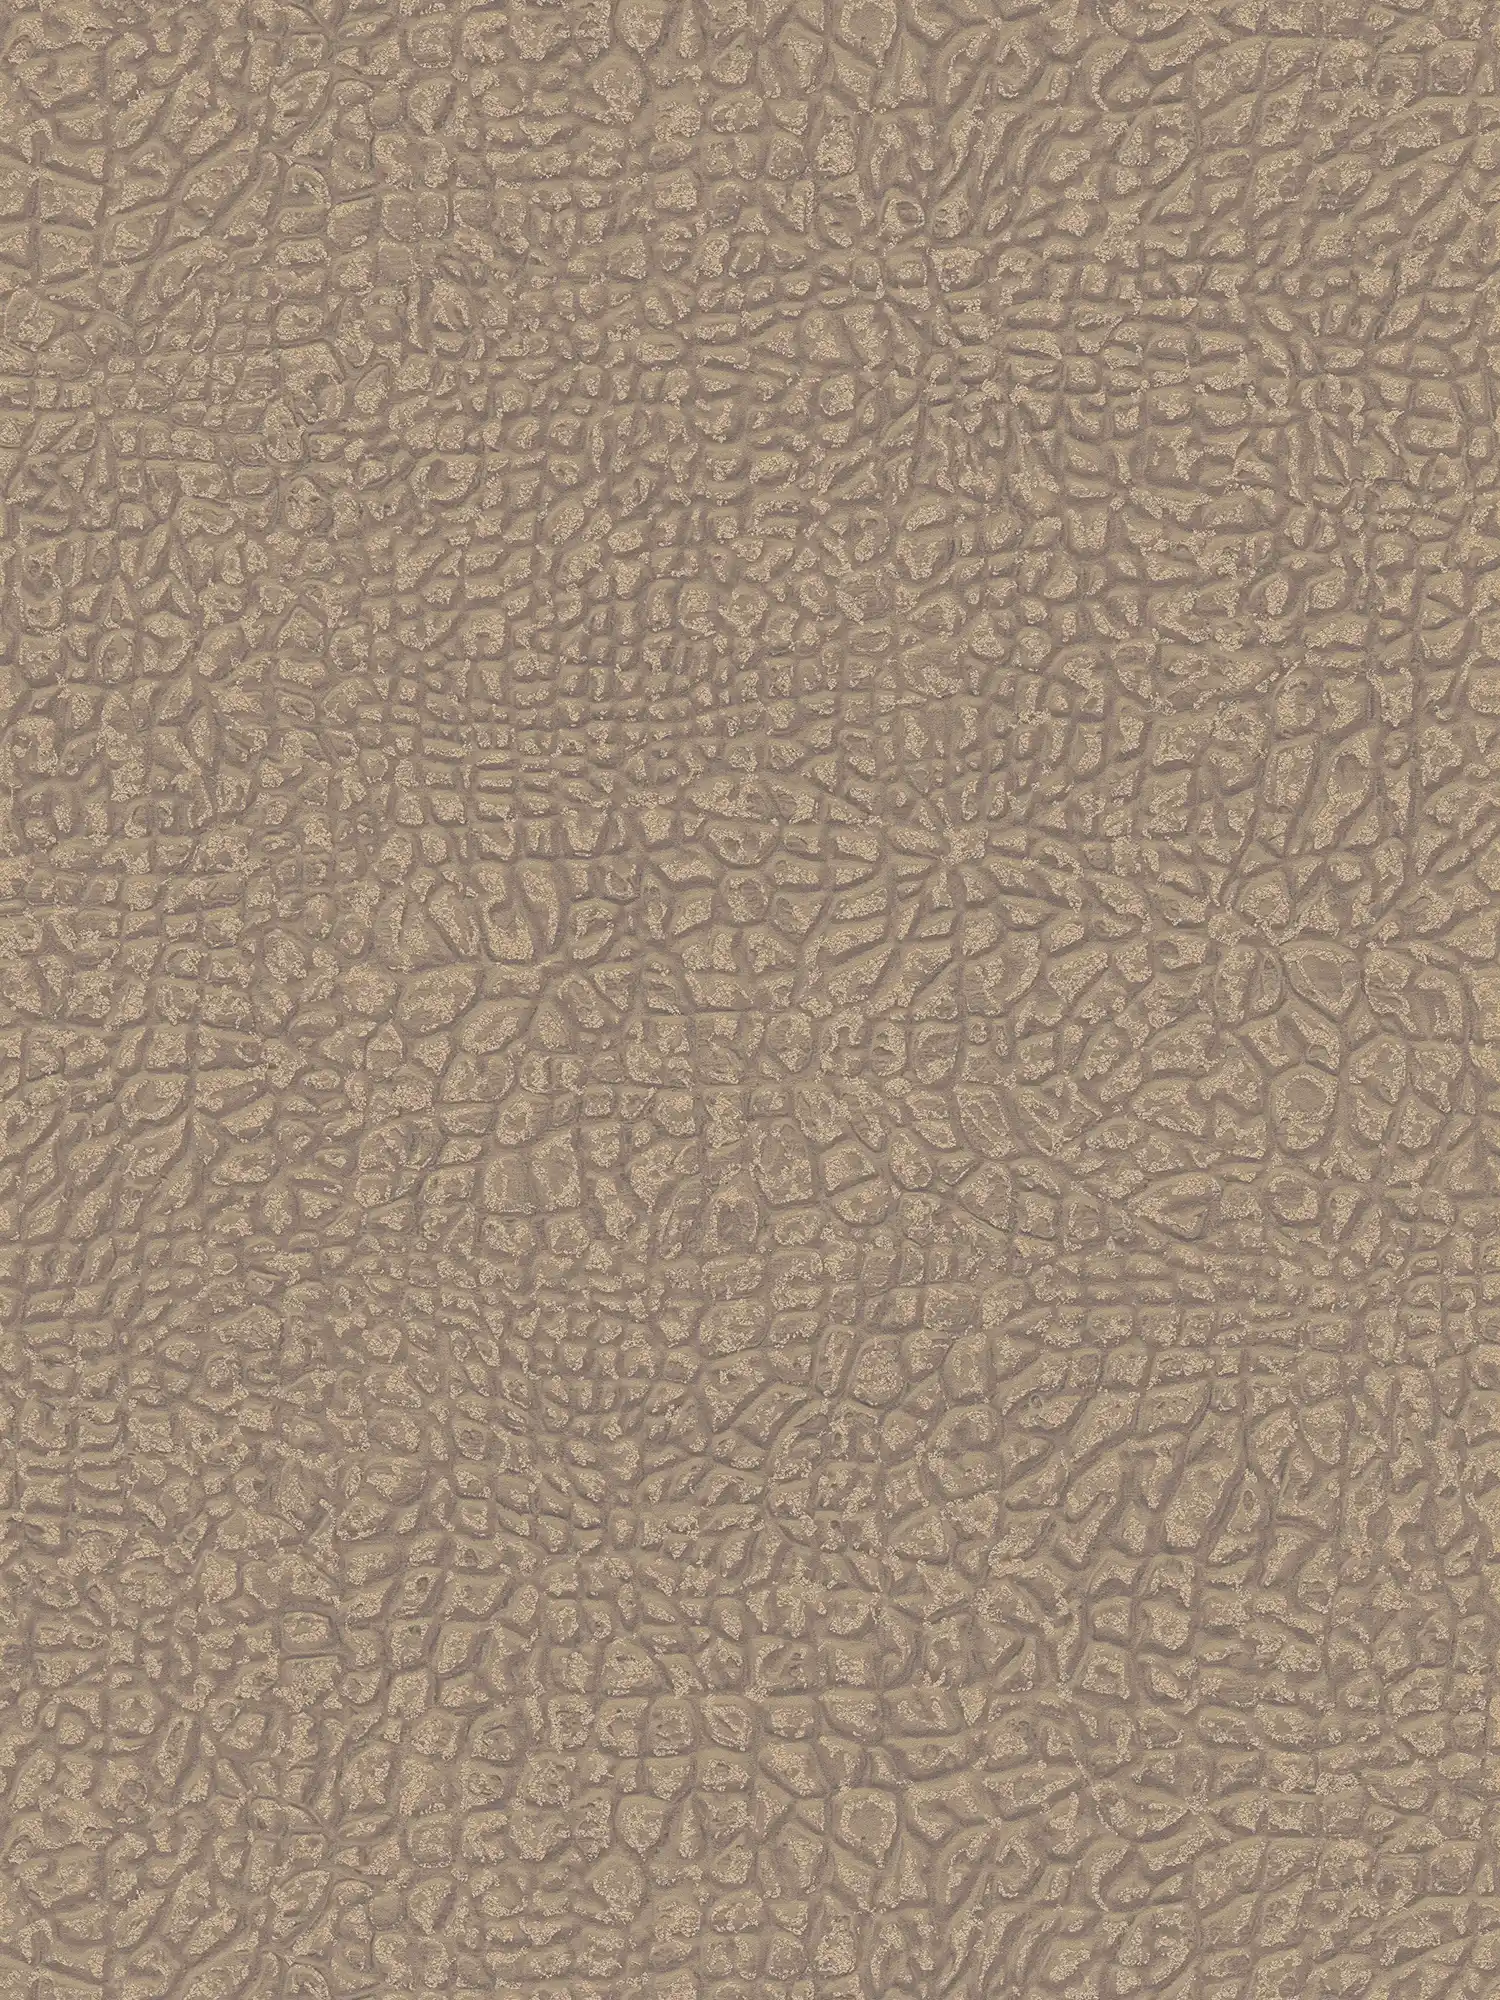 Wallpaper with fine stone pattern, metallics & 3D effect - Brown, Gold, Beige
